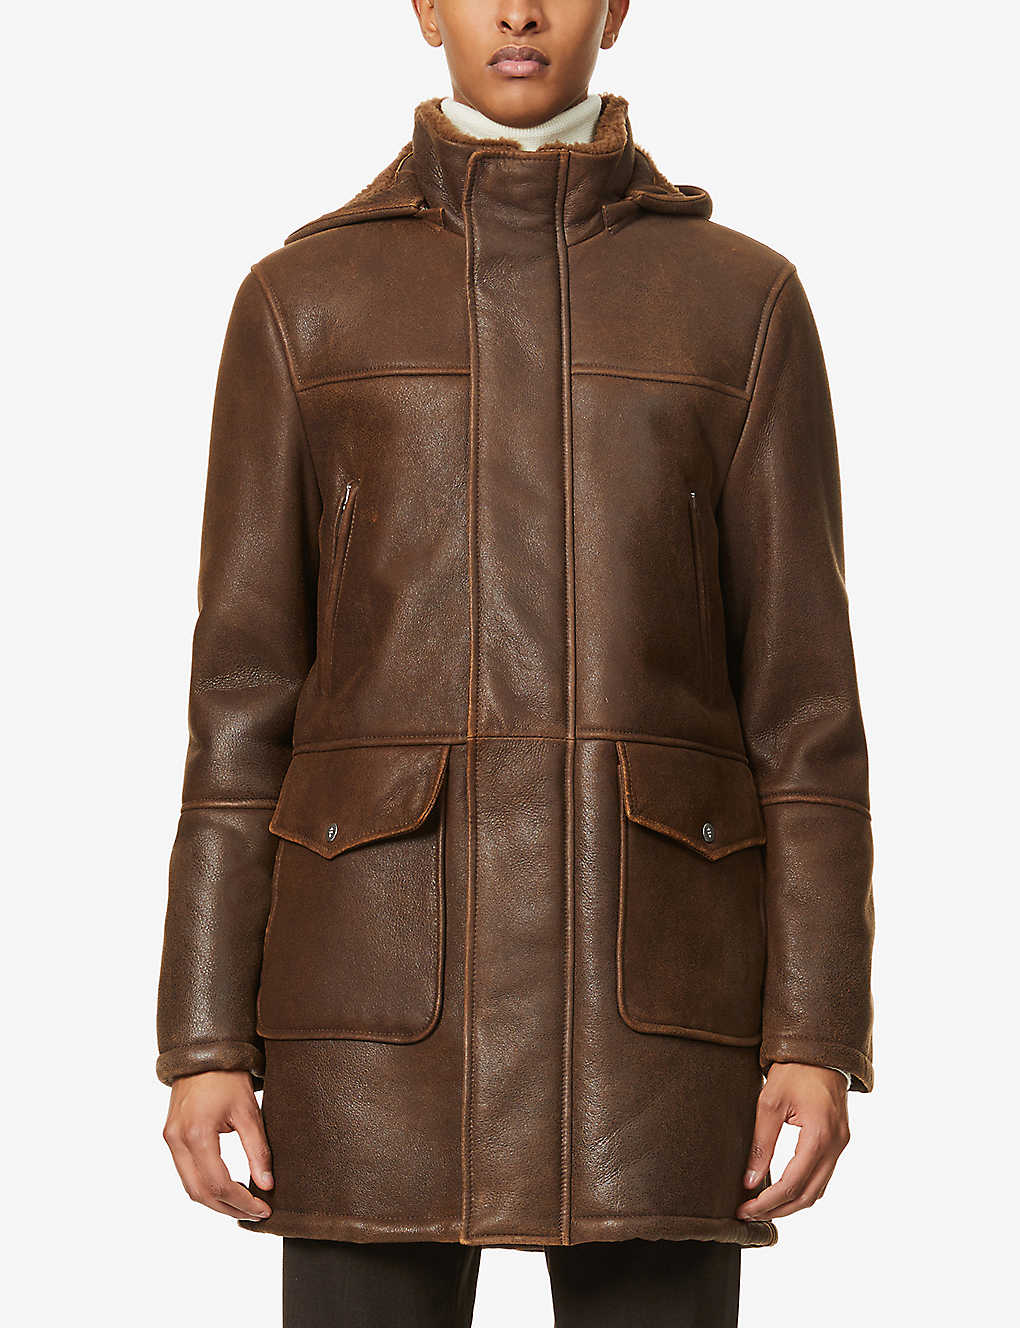 Men's Fur Sheepskin Leather Coat In Dark Brown With Removable Hood